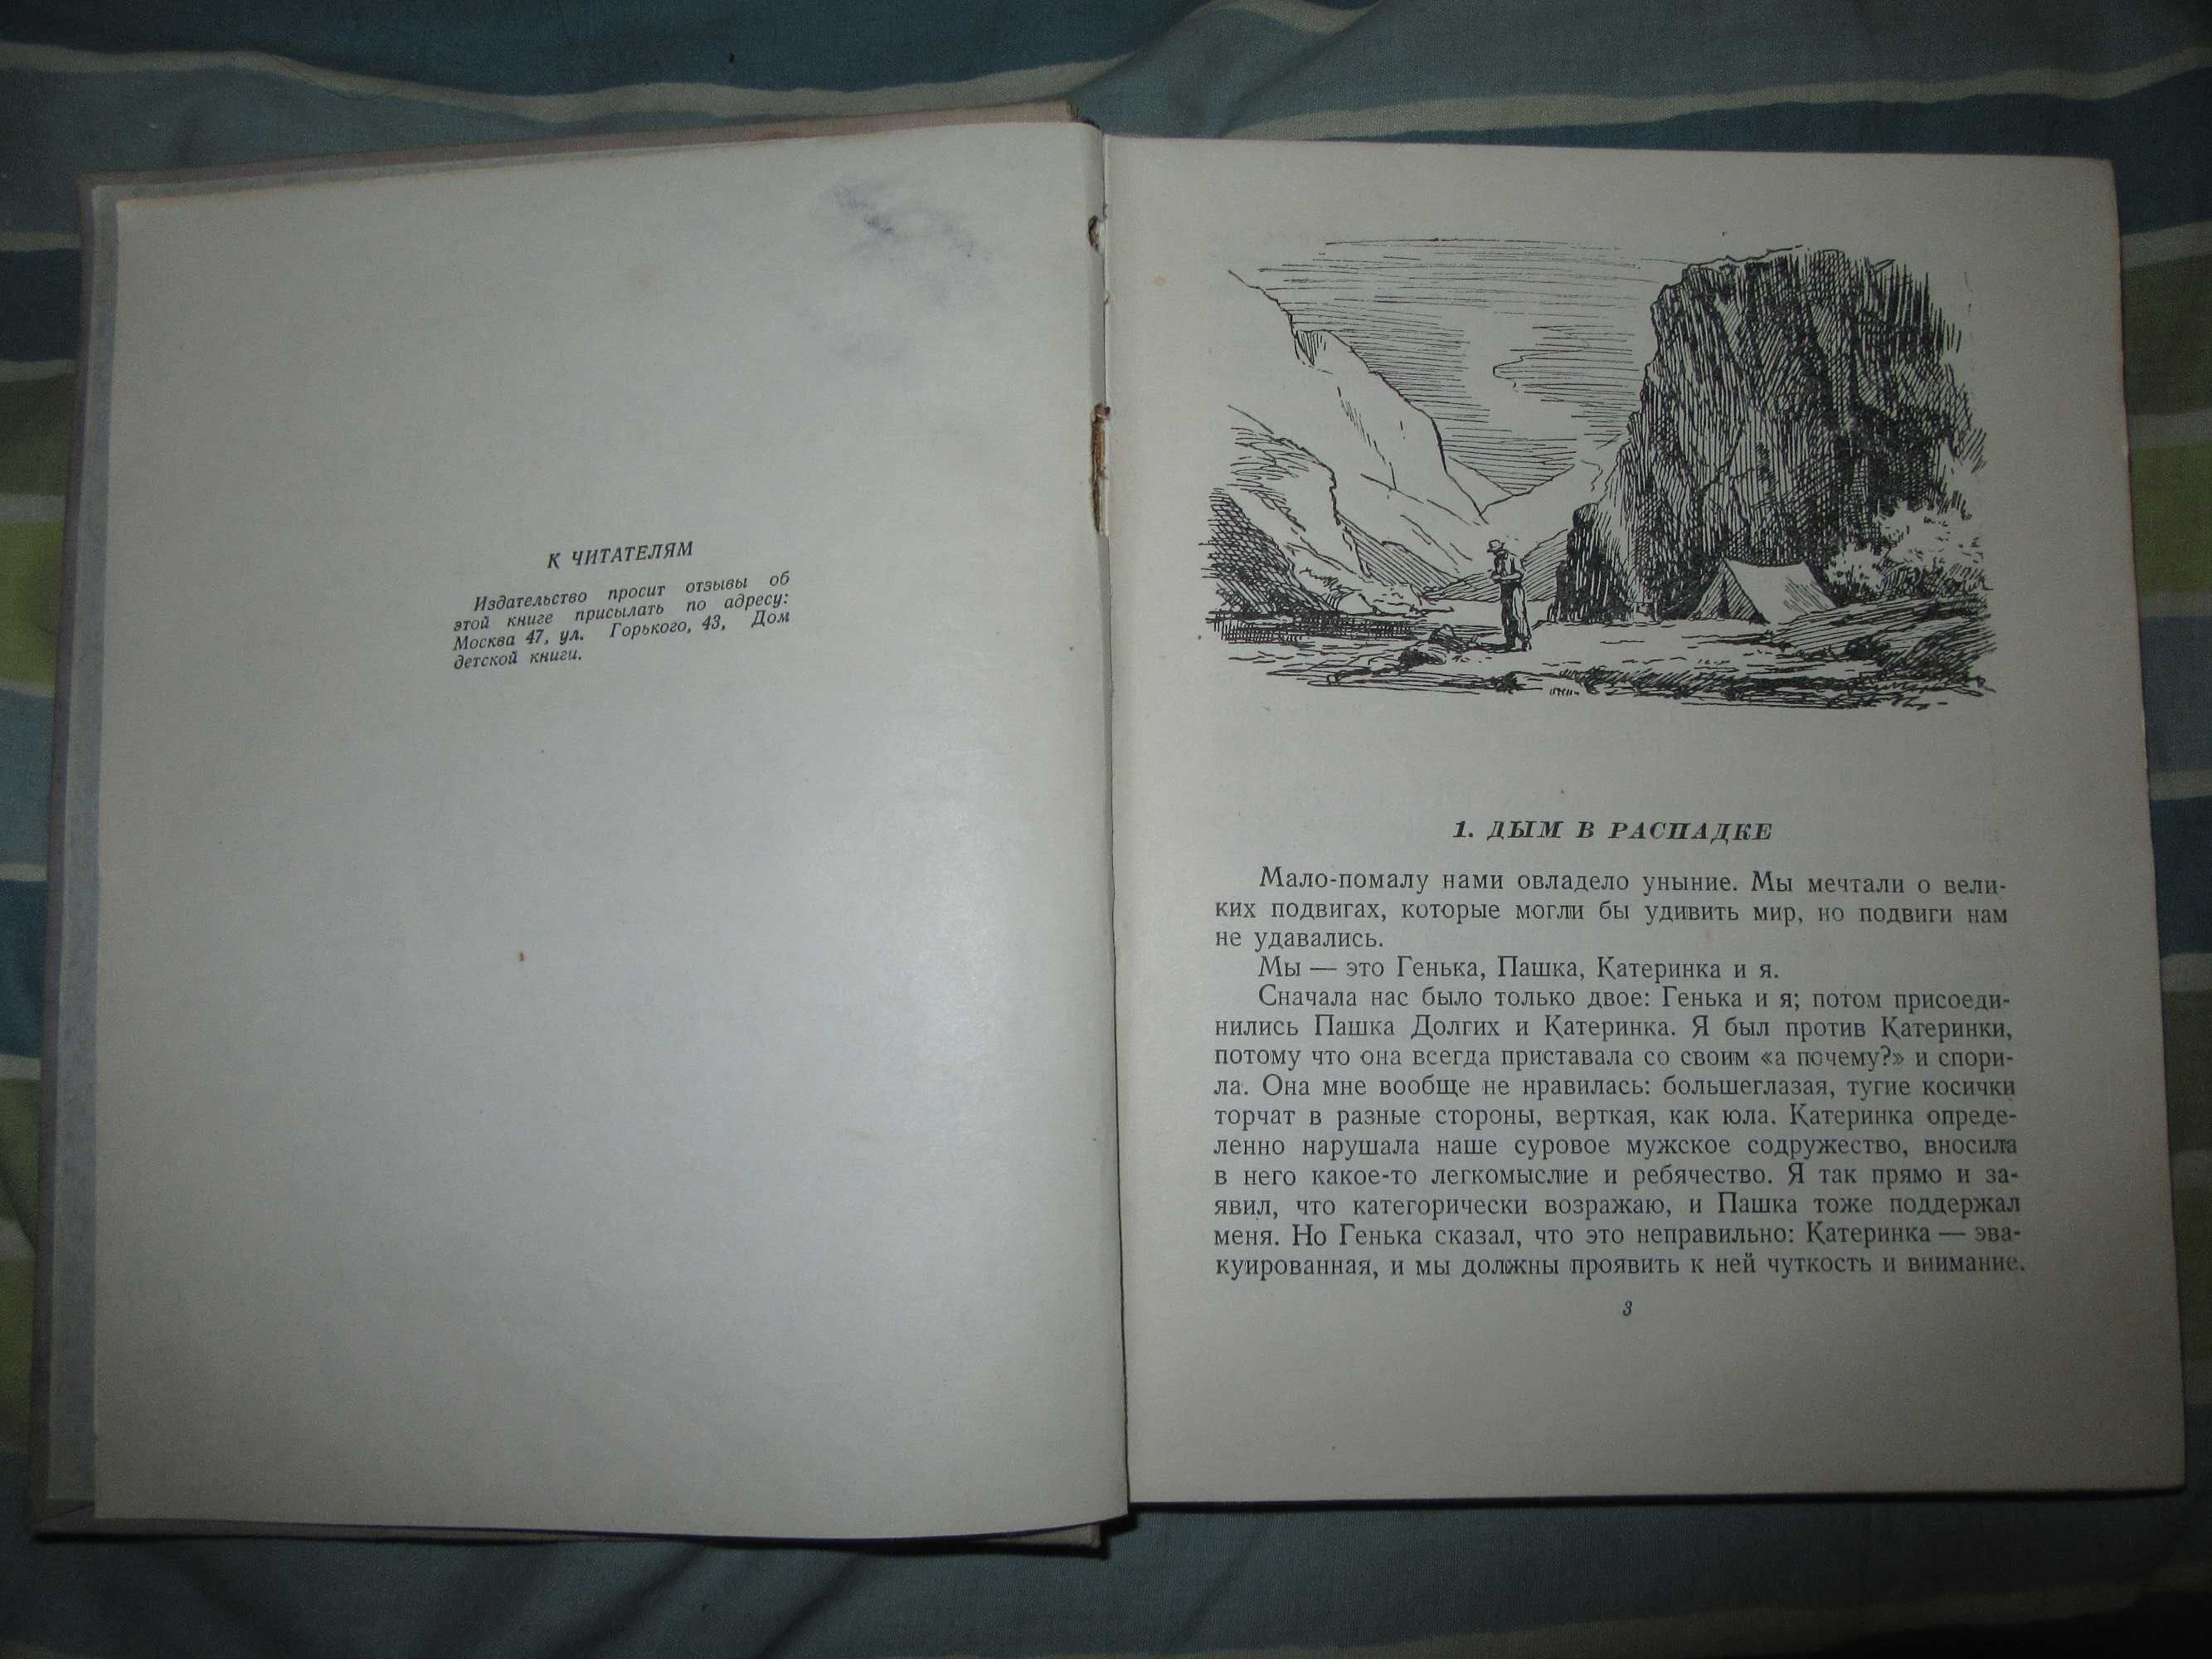 Дубов Николай Иванович.На краю земли."Детская литература",1951 г.